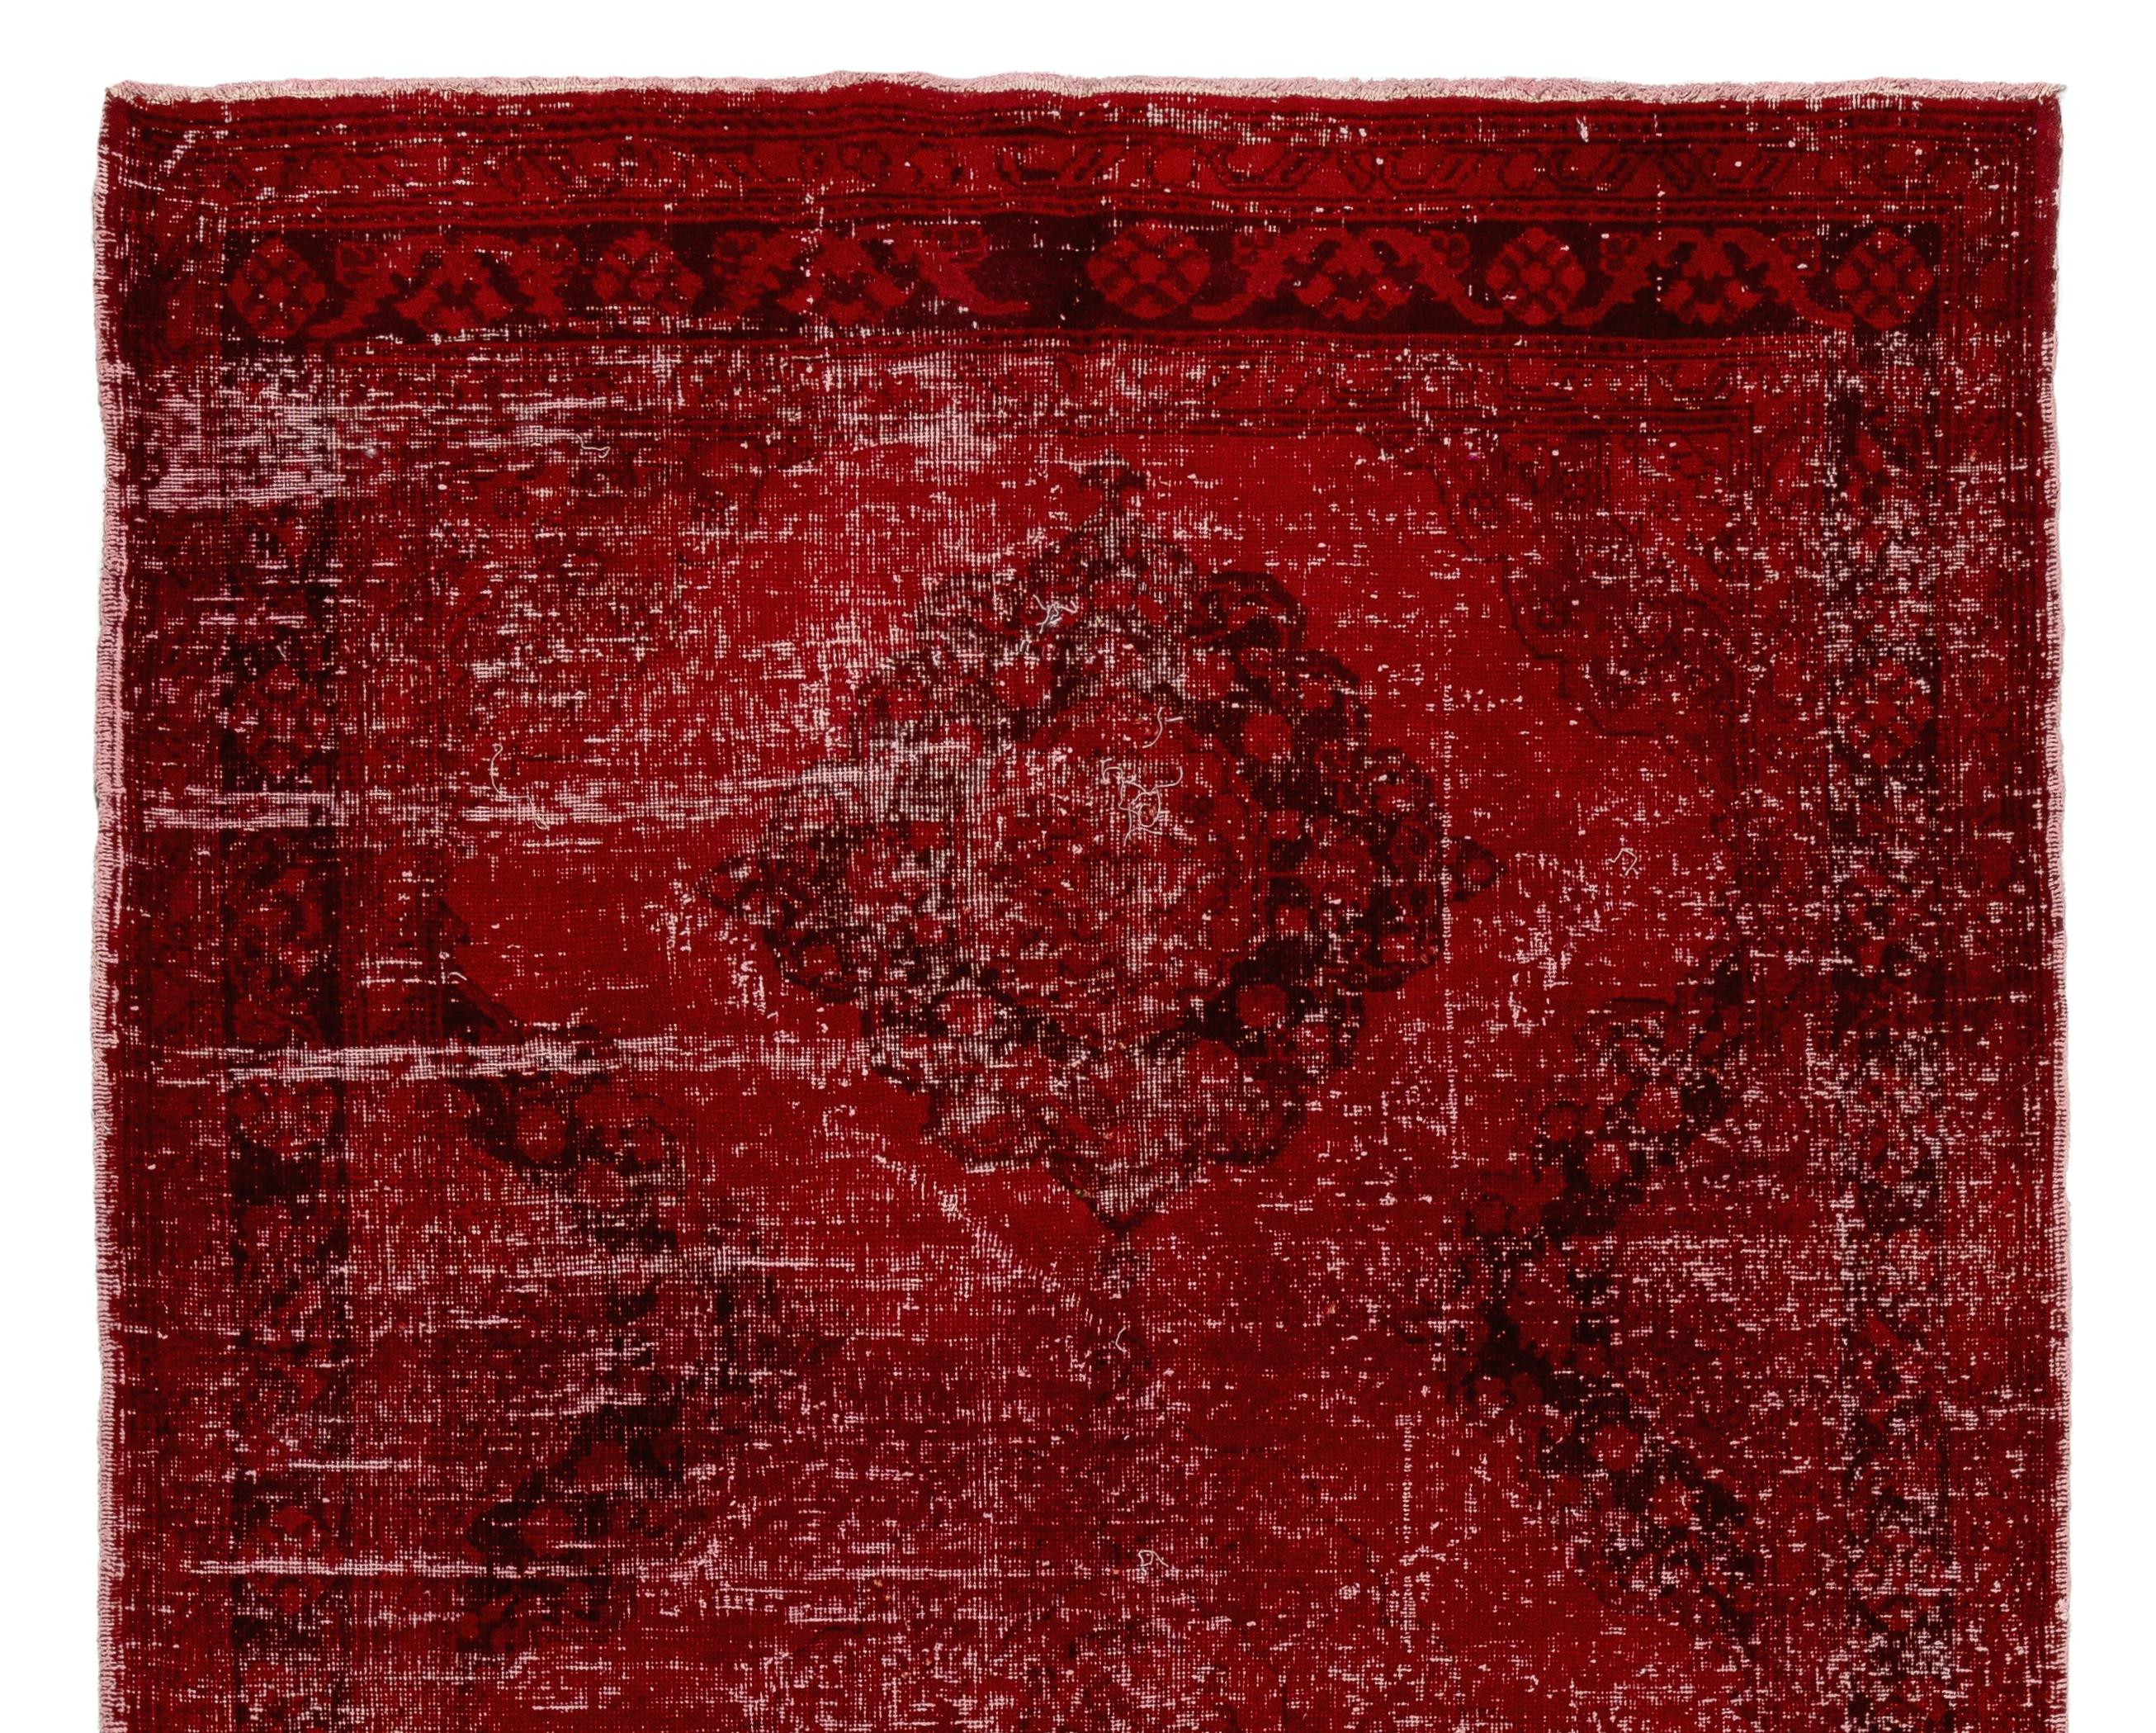 Hand-Knotted 4.8x12.2 Ft Handmade Turkish Runner Rug in Burgundy Red, Modern Corridor Carpet For Sale